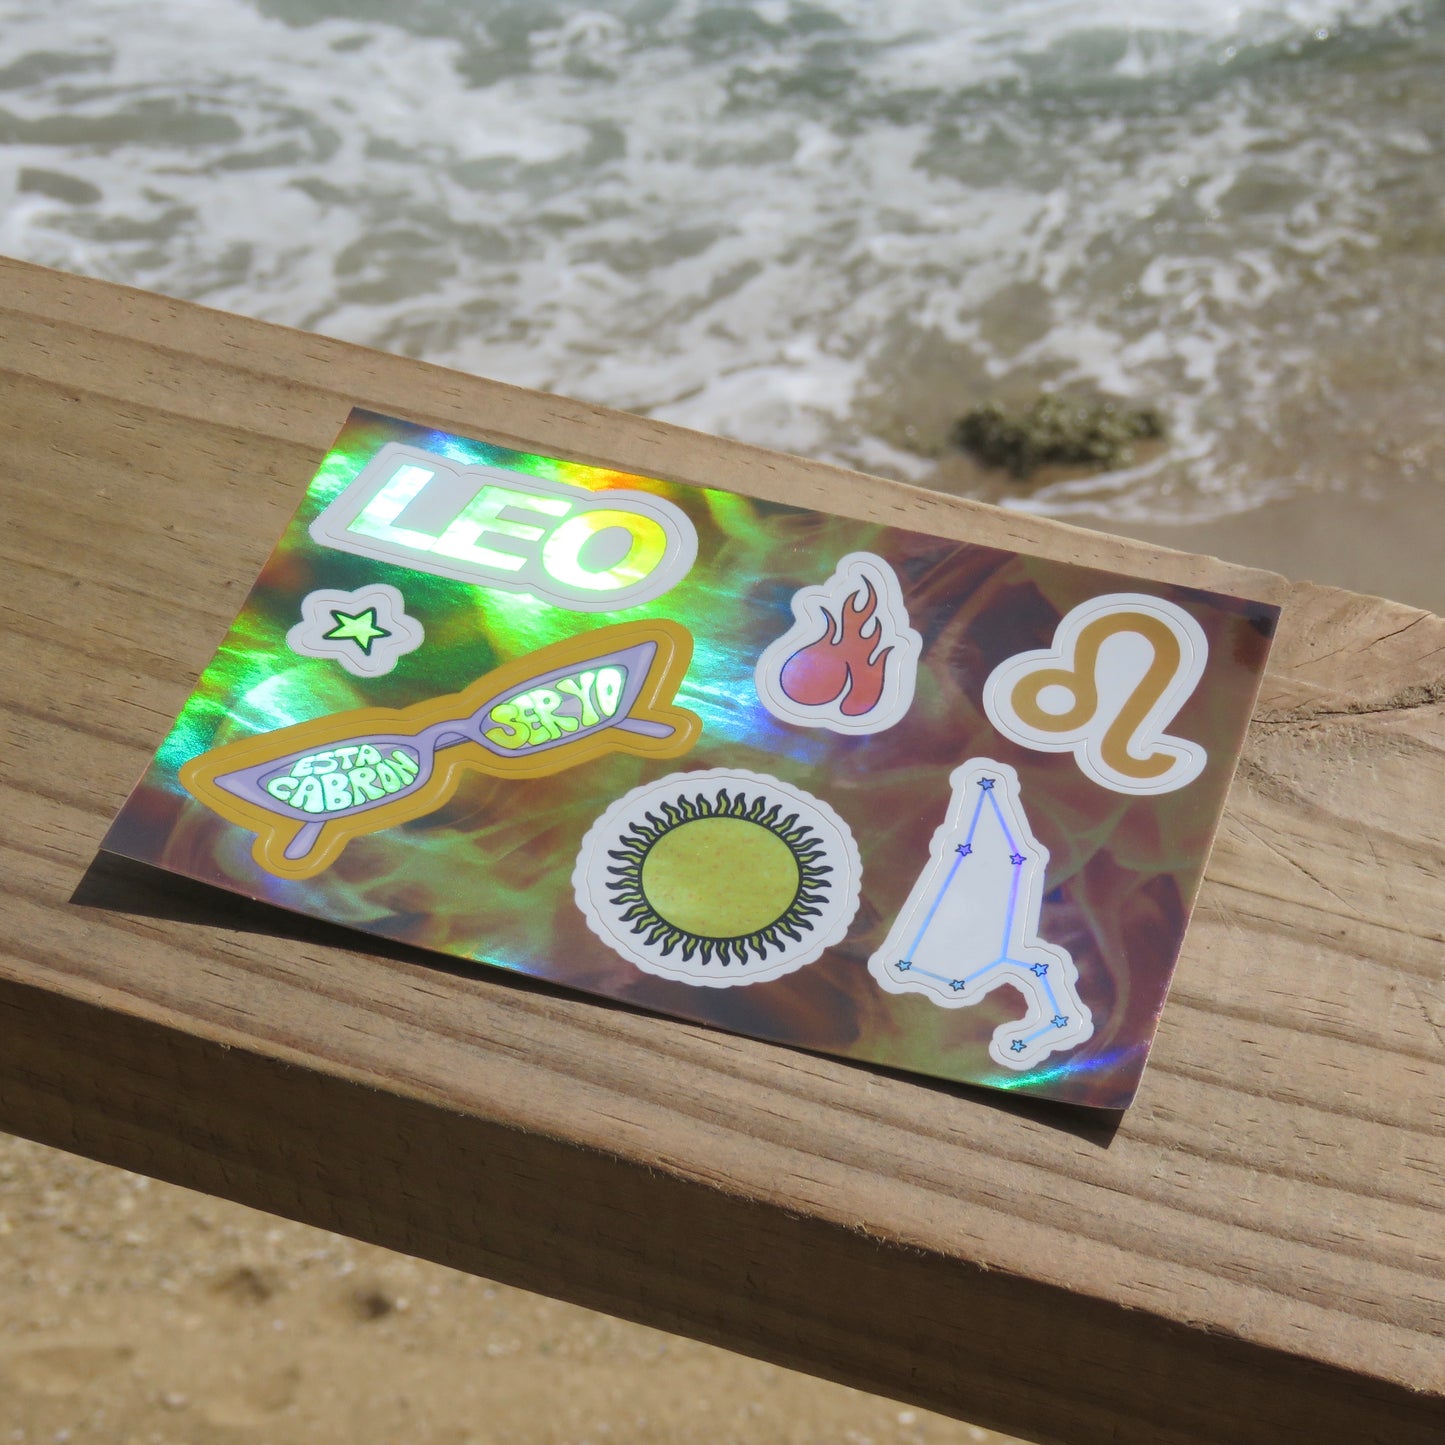 Leo - Sticker Sheet (Premium Holographic)